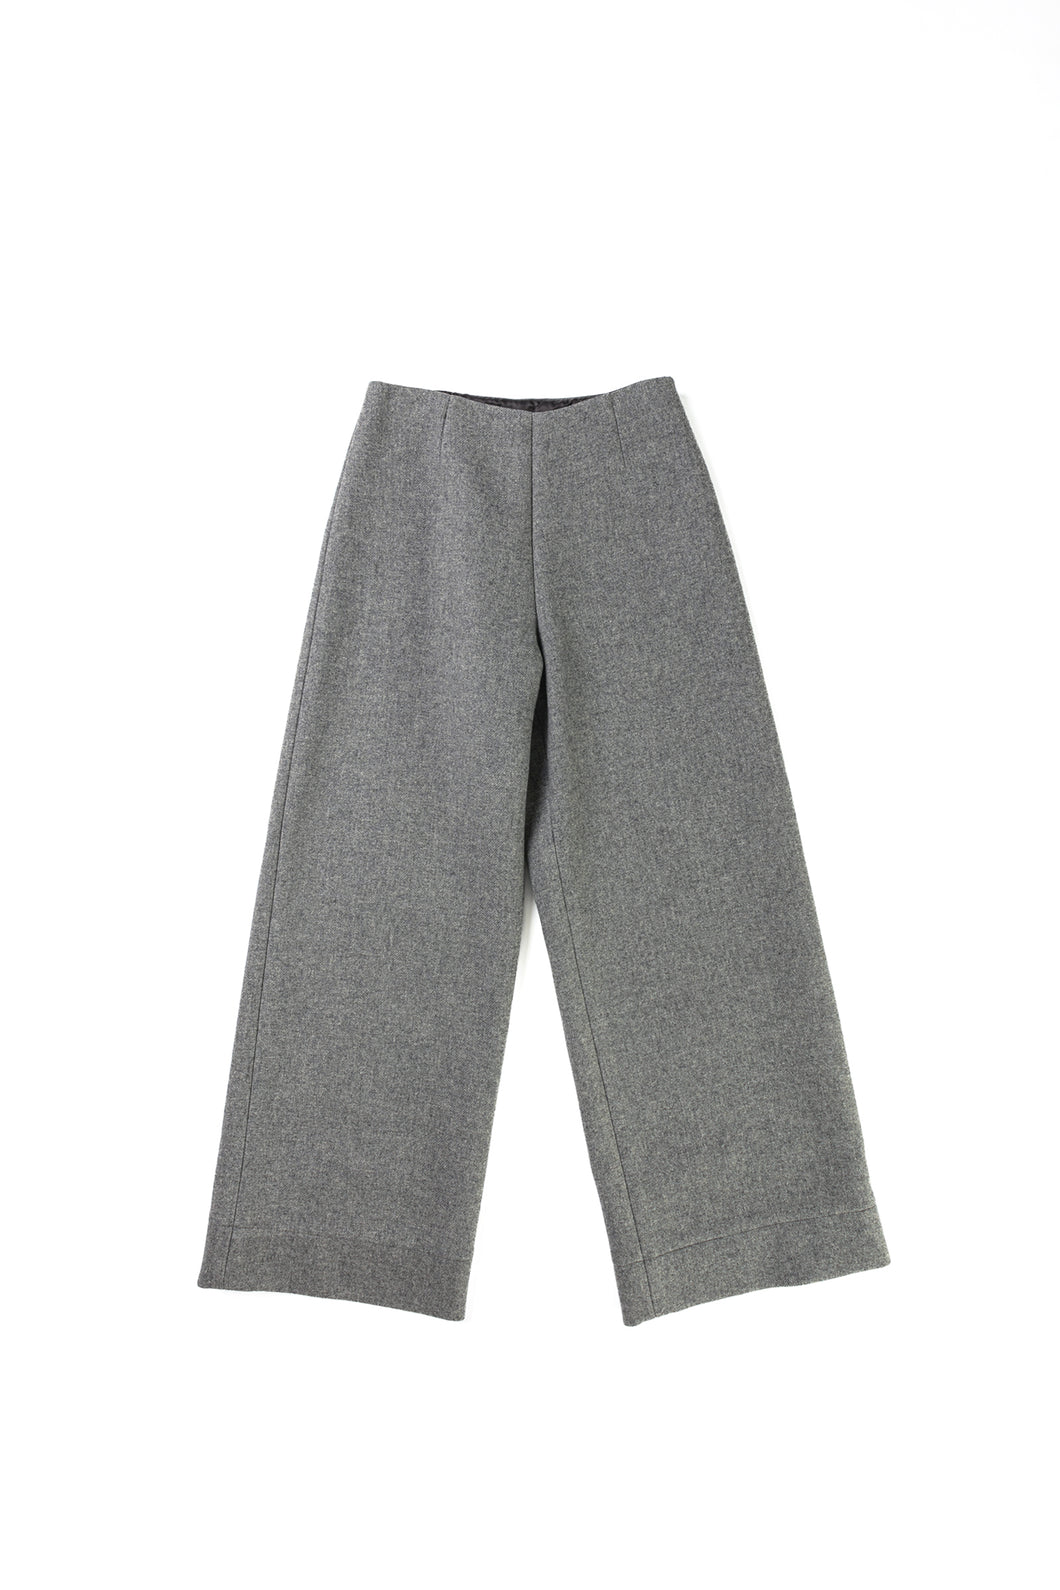 Sara Lanzi Flared Pants (Grey)